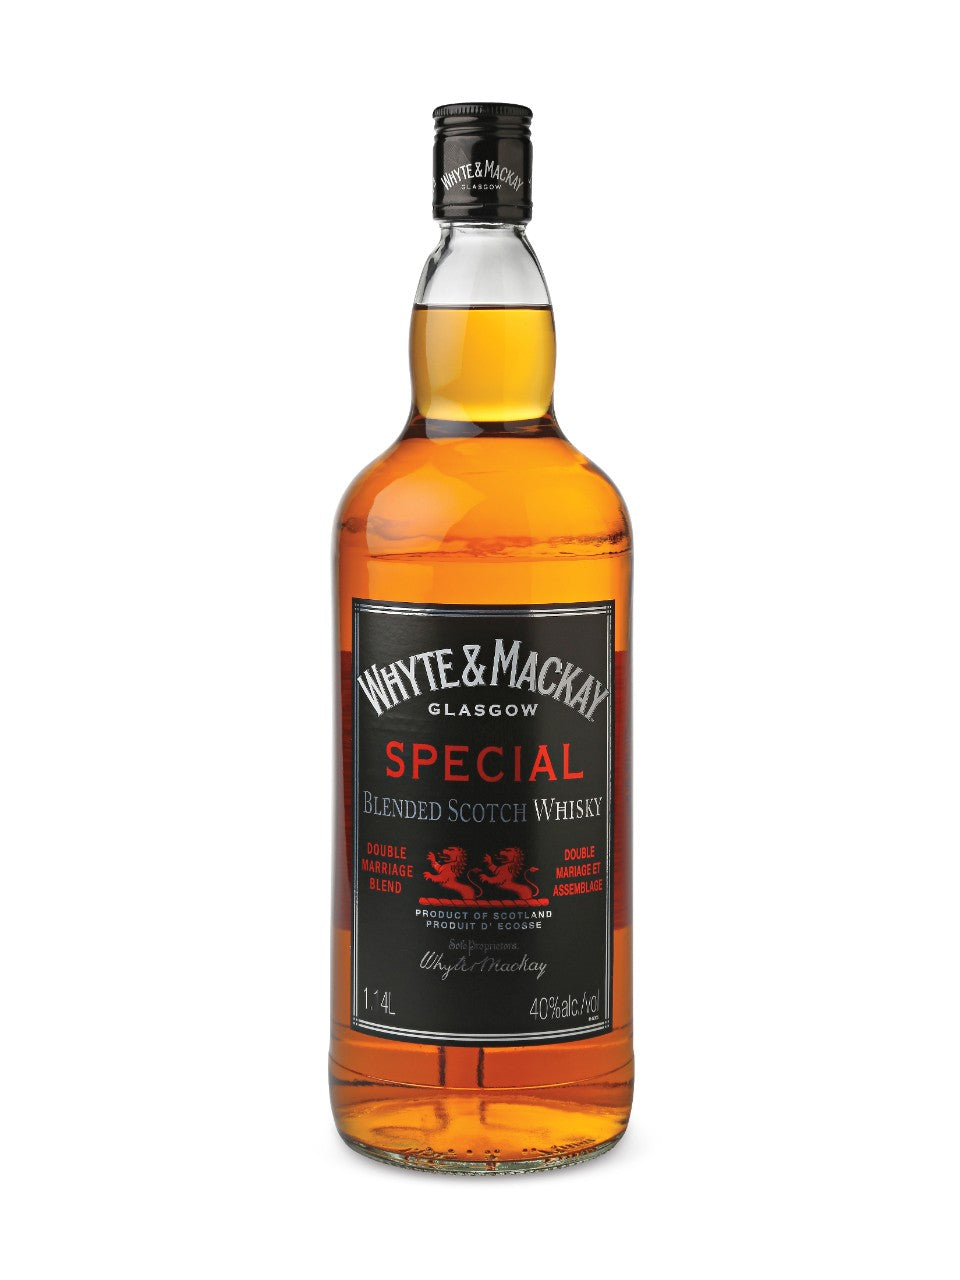 Whyte & Mackay Special Blend Scotch Whisky 1140 mL bottle